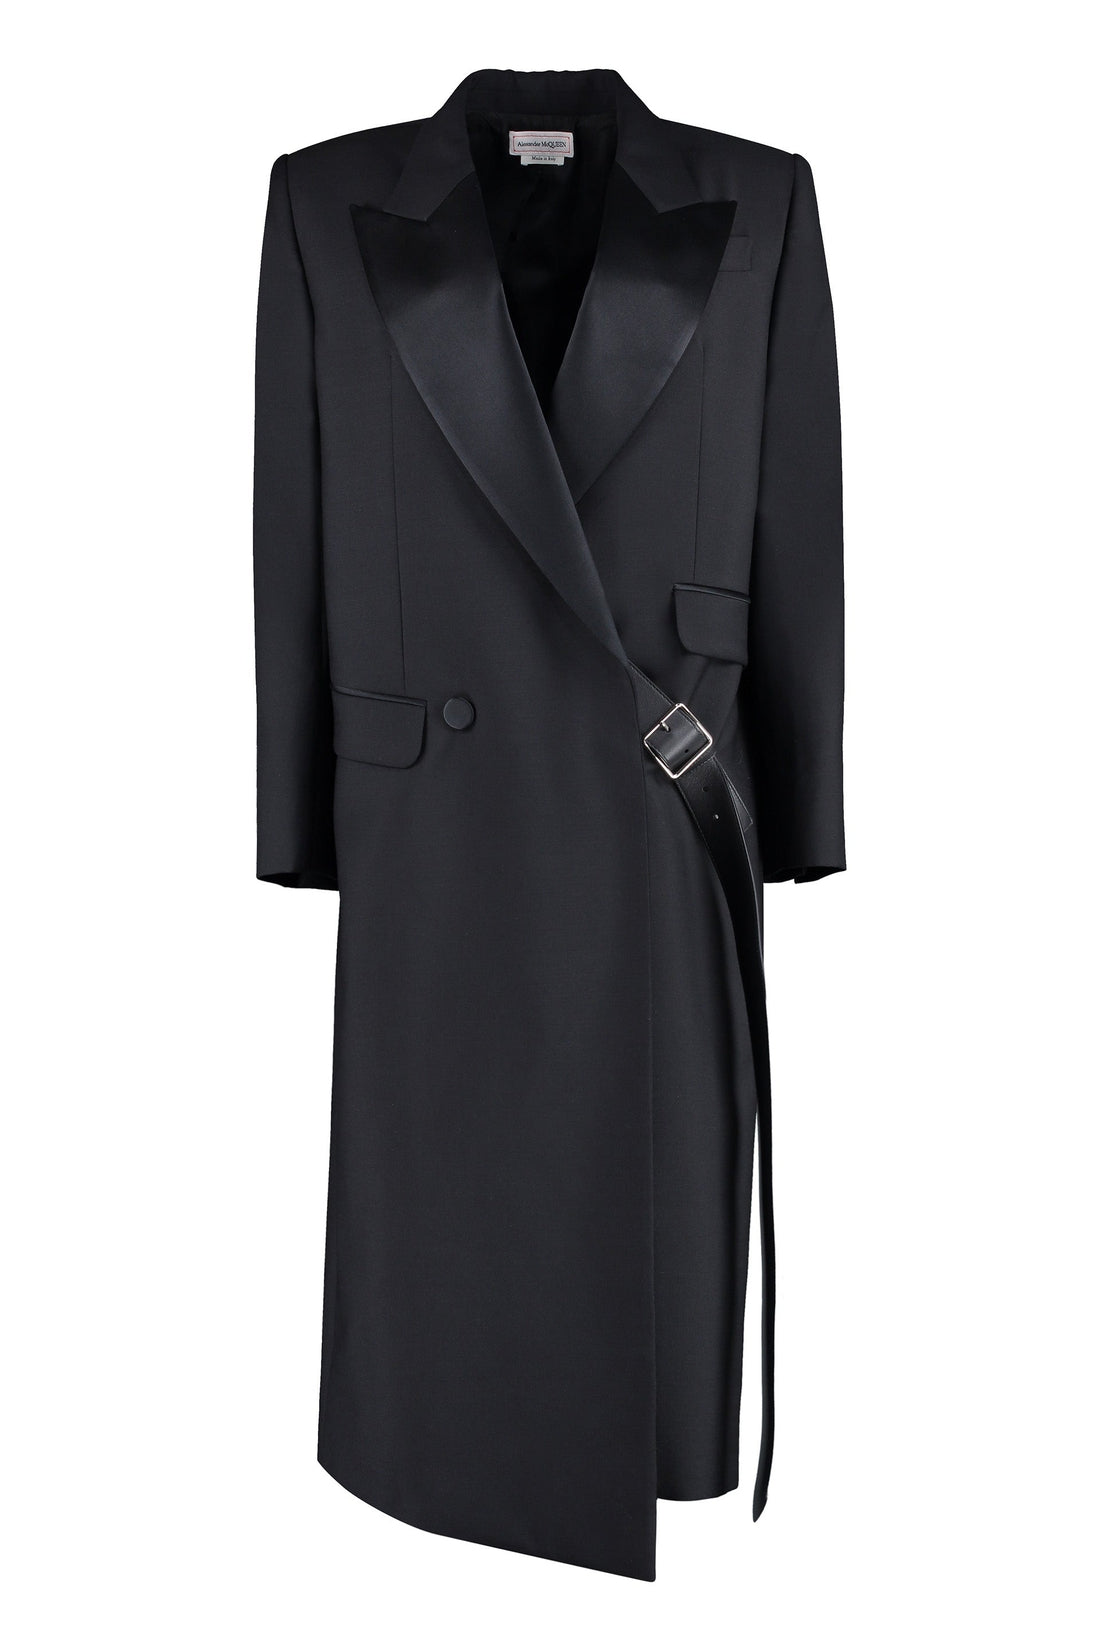 Alexander McQueen-OUTLET-SALE-Oversize wool-mohair blend coat-ARCHIVIST